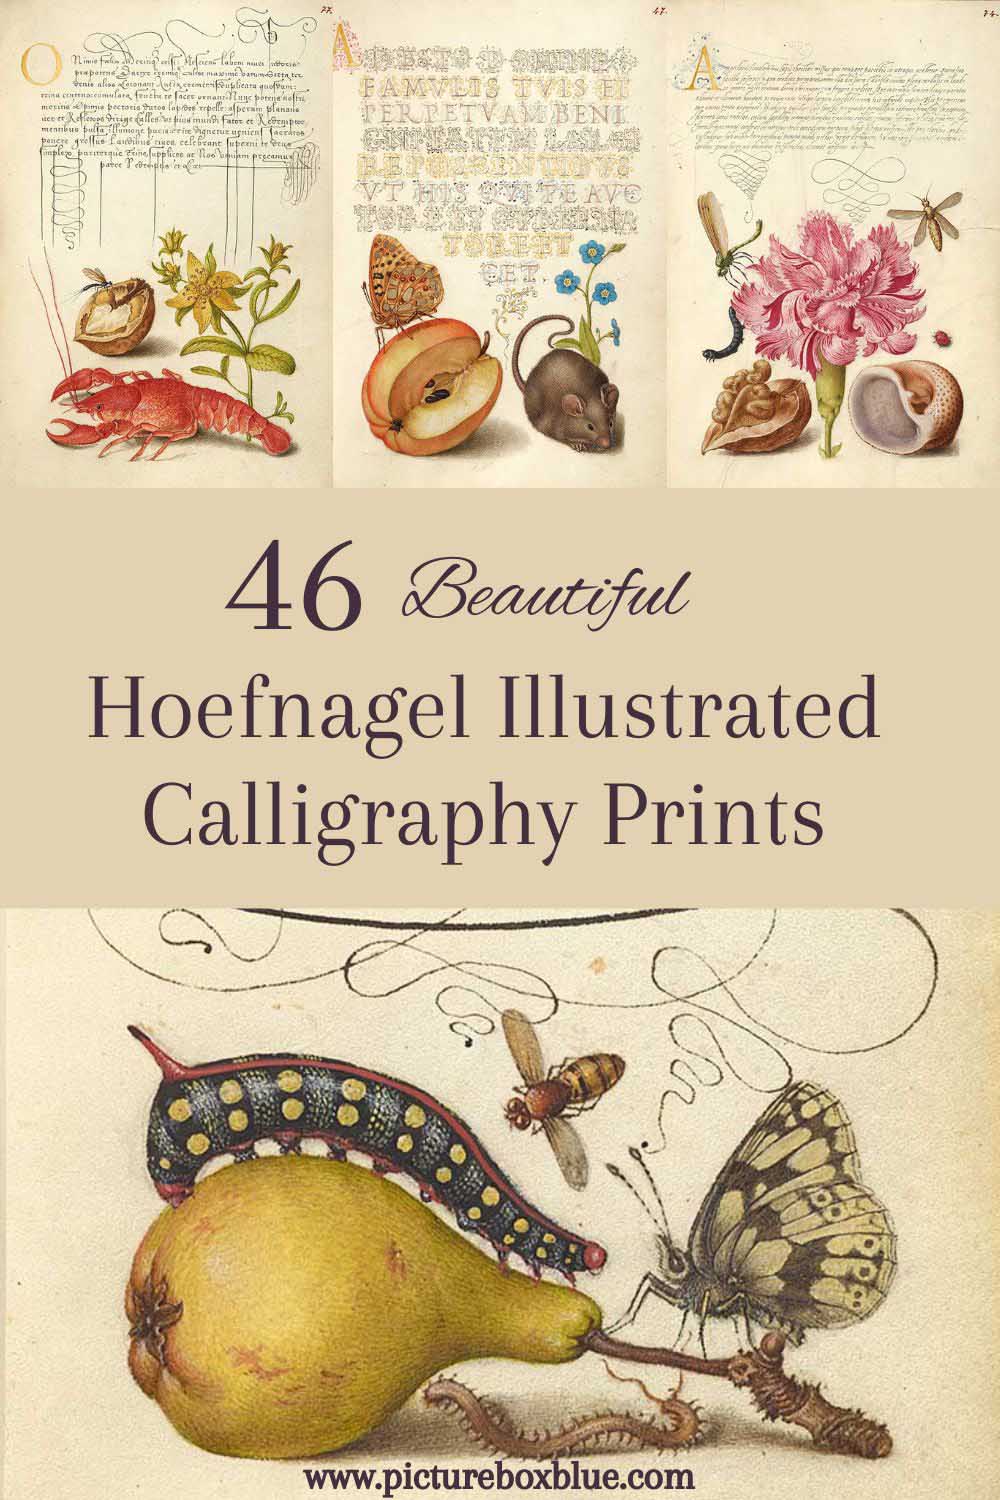 46 Hoefnagel Illustrated Calligraphy Prints